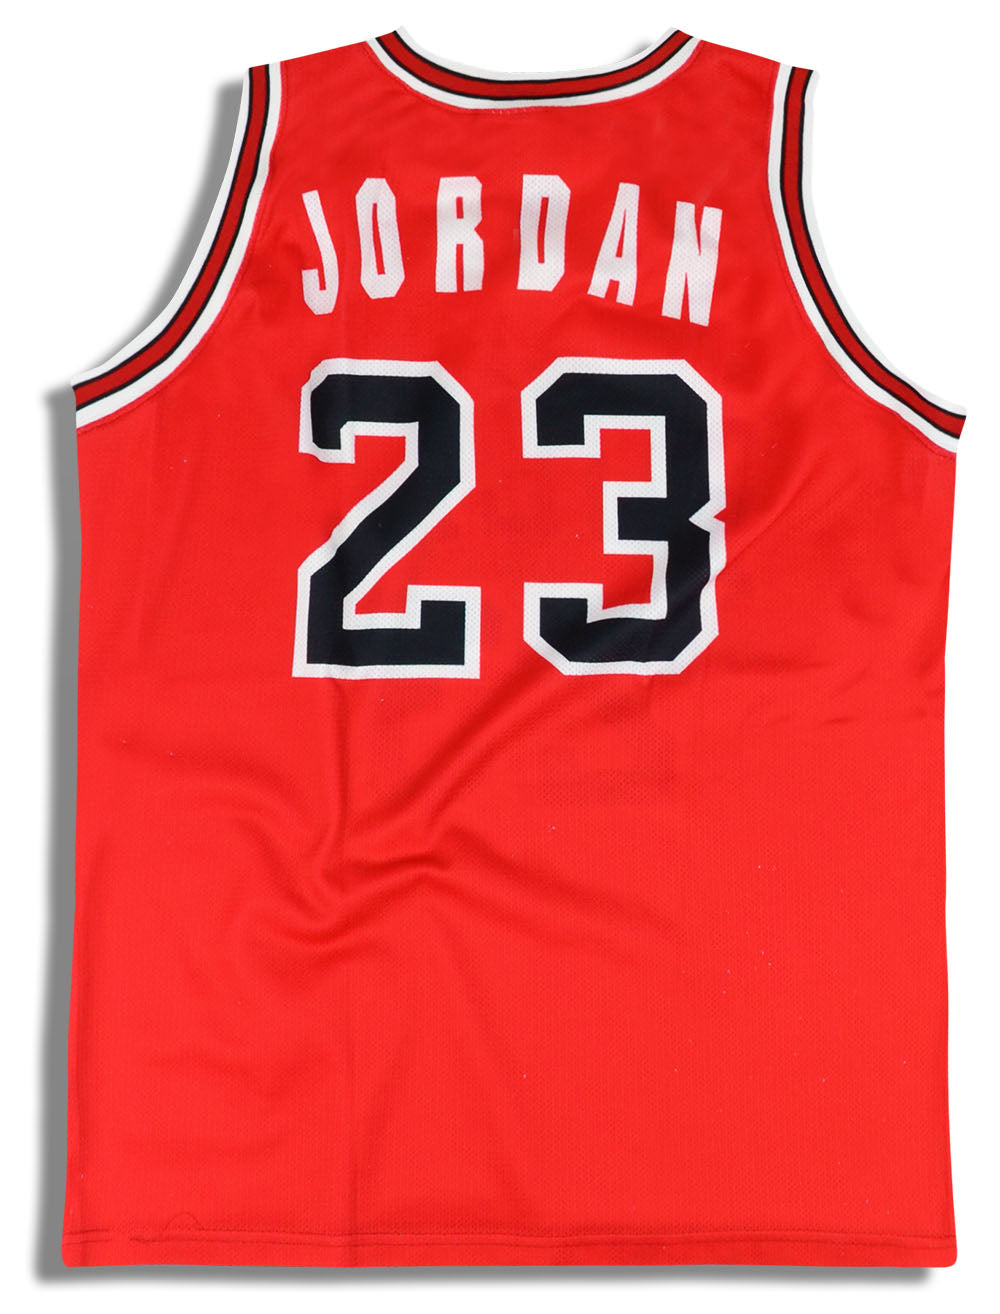 Michael Jordan Chicago Bulls Throwback Jerseys